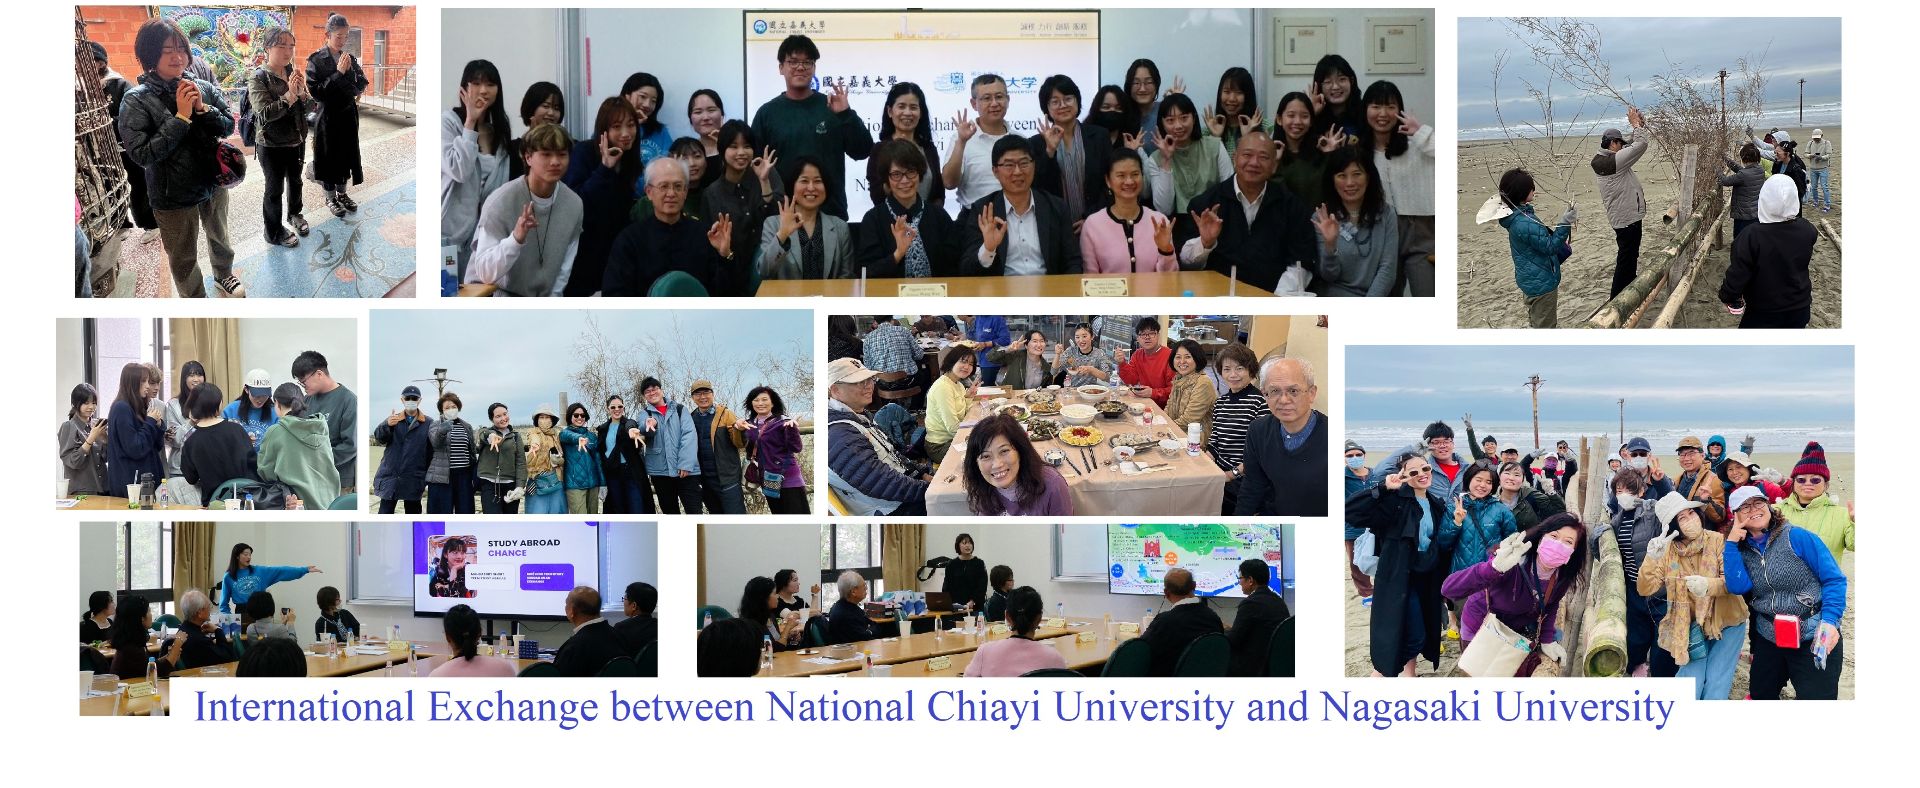 International Exchange between National Chiayi University and Nagasaki University